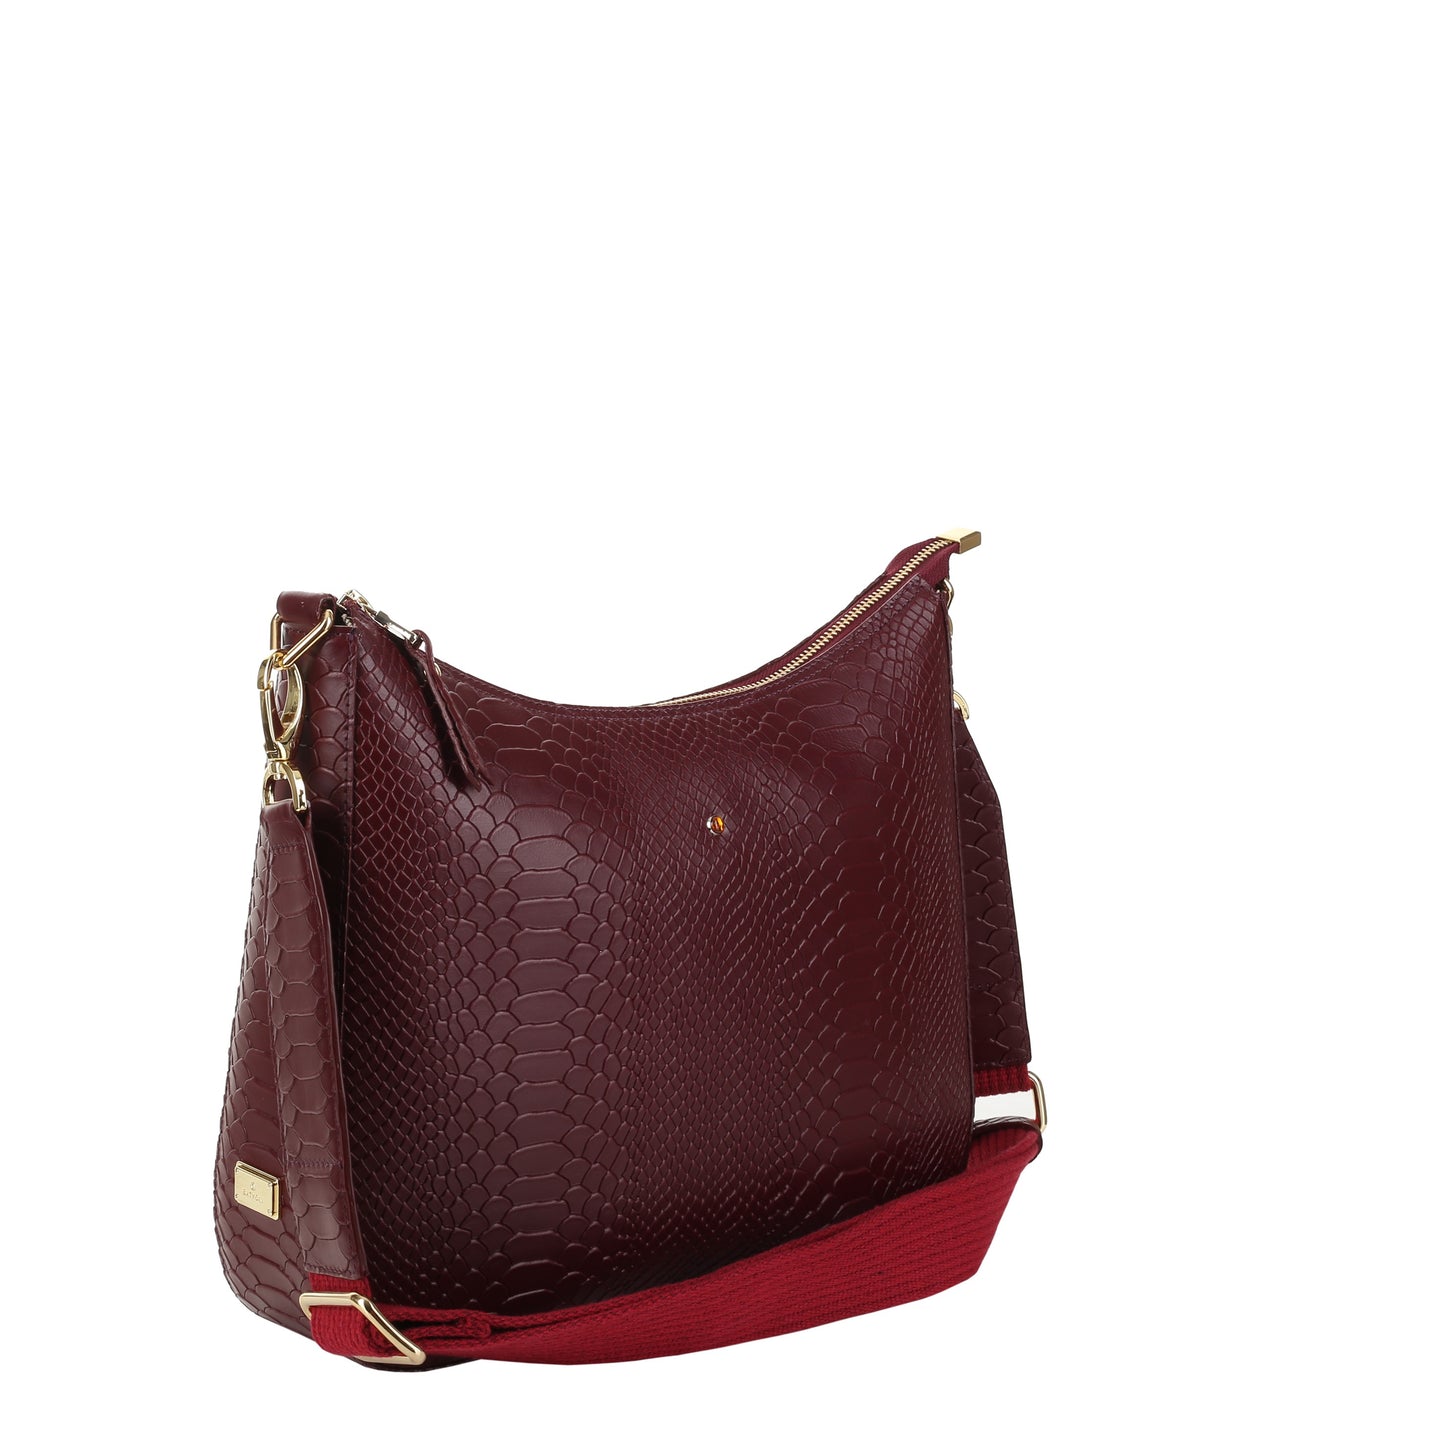 ELYSEE CLARET women's leather handbag